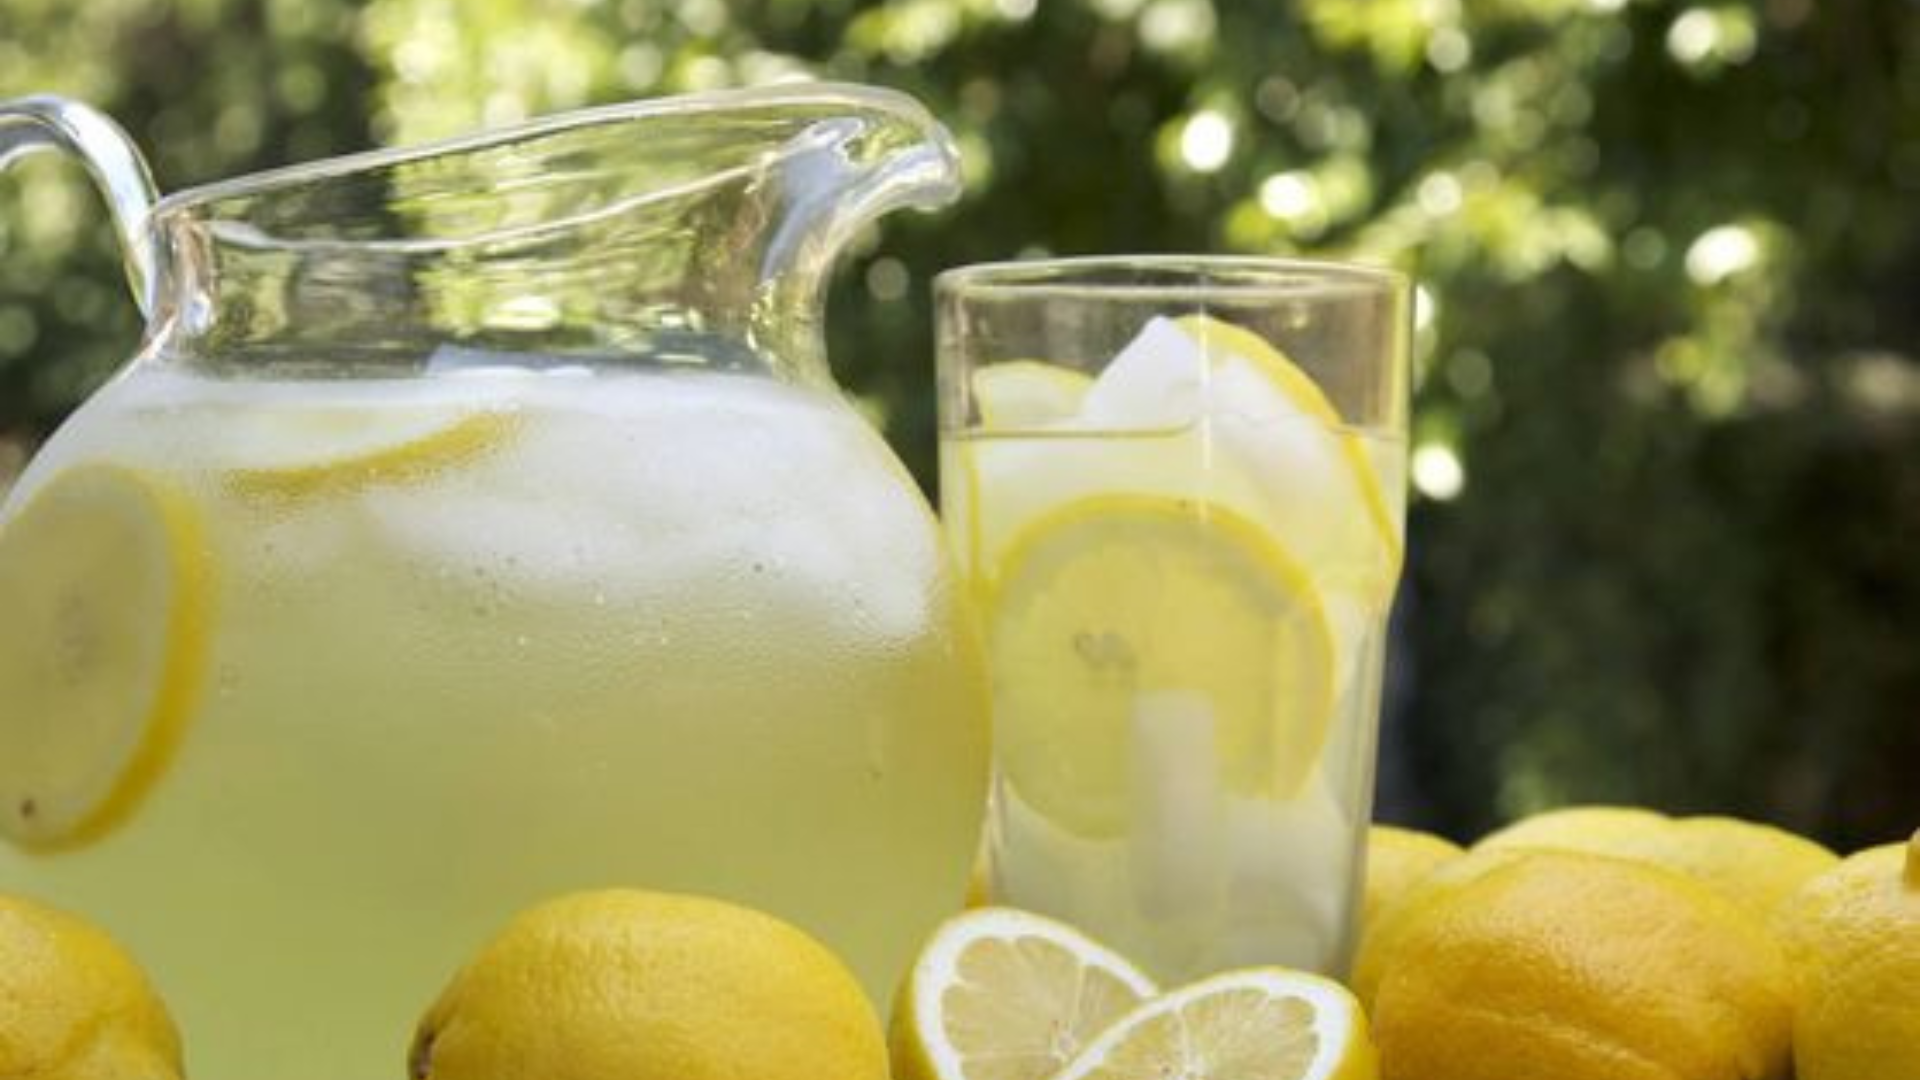 ¿Engañados? 4 “Beneficios” del agua con limón que son mentira según la ciencia